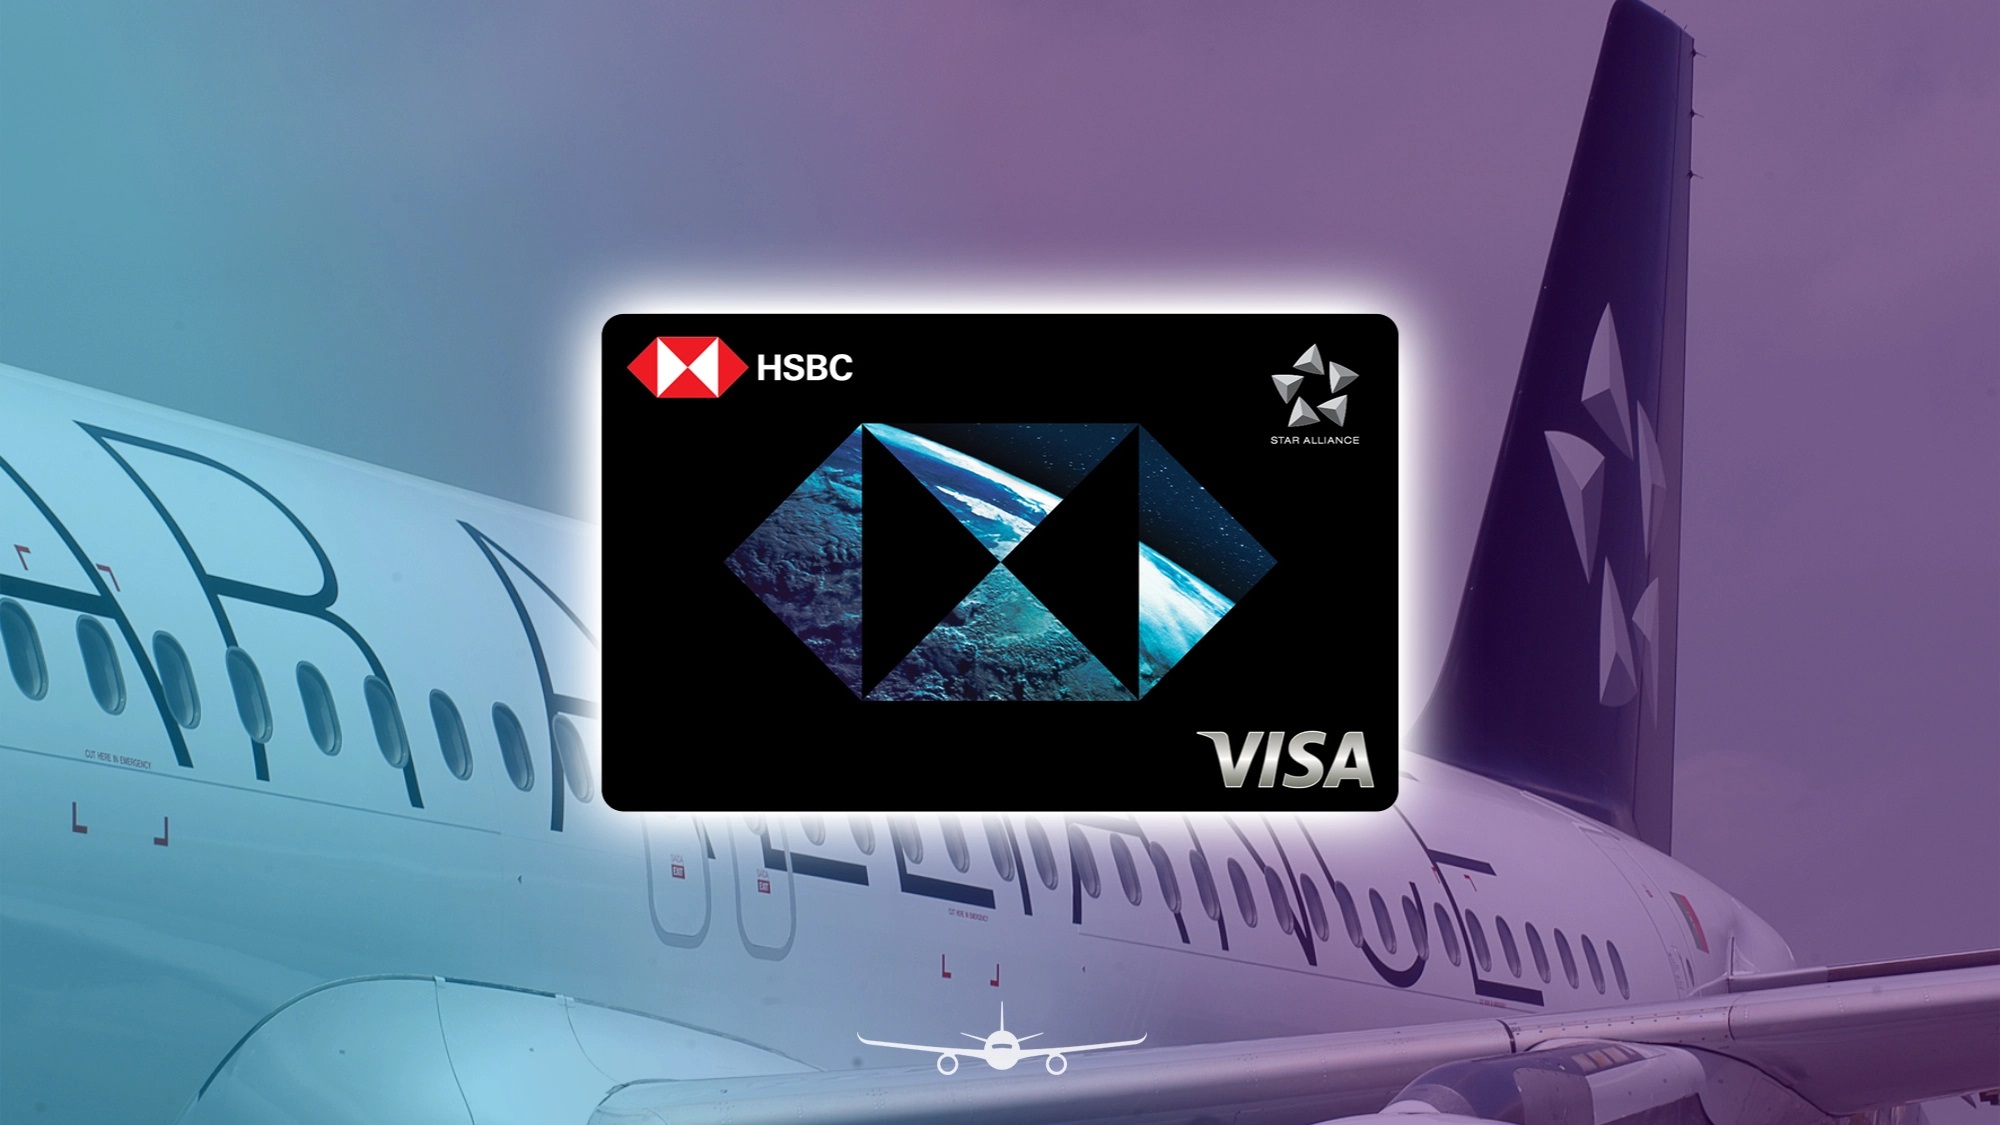 HSBC Star Alliance Credit Card atop Star Alliance livery plane to earn Star Alliance Rewards.